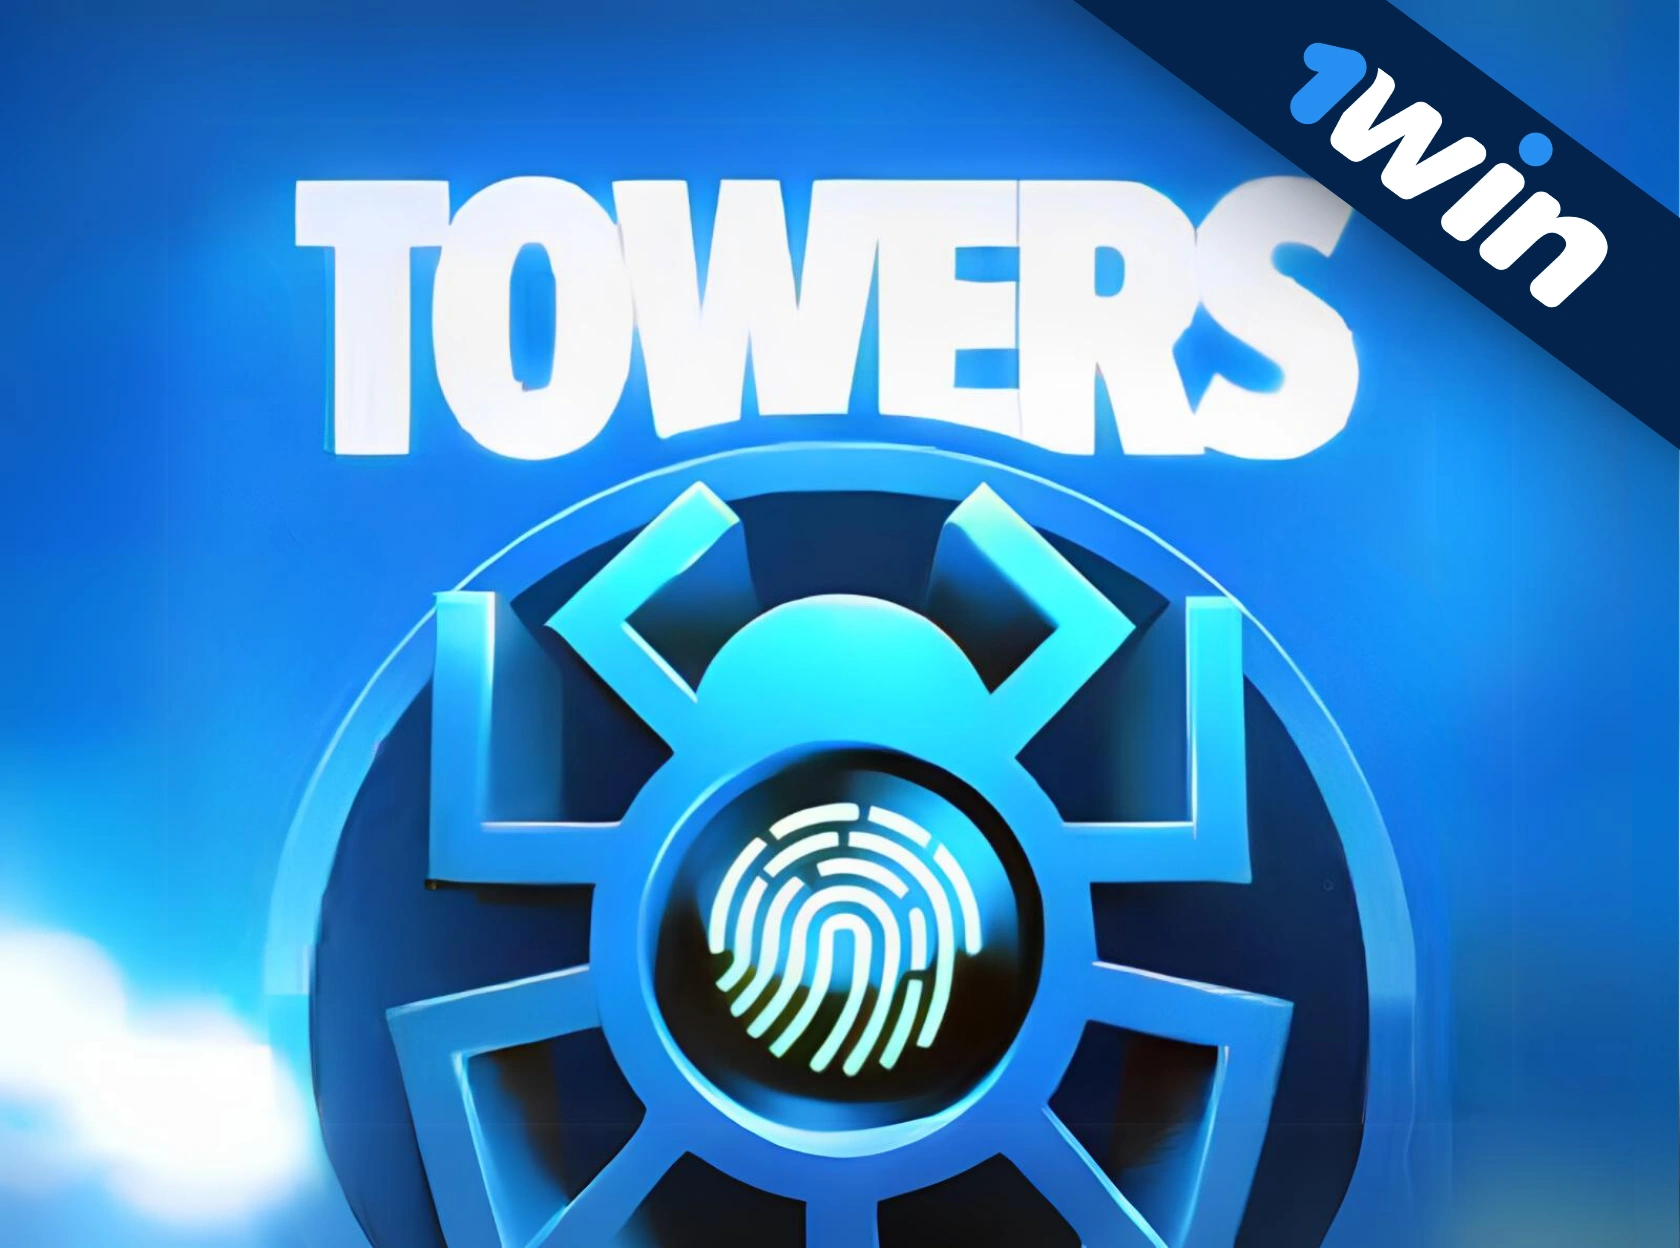 Towers 1win - yangi eksklyuziv o'yin!